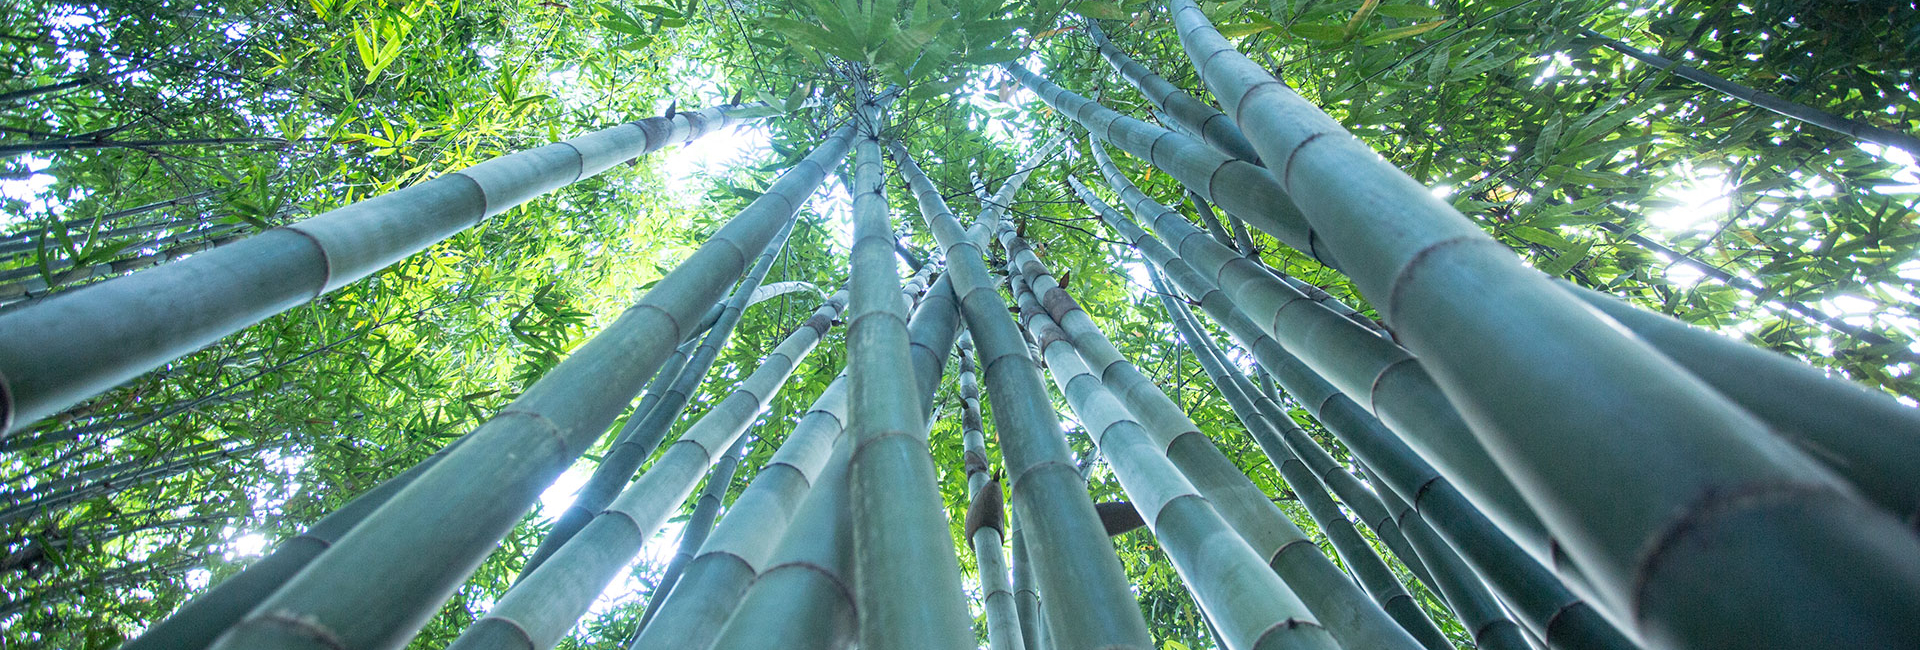 Bambus material